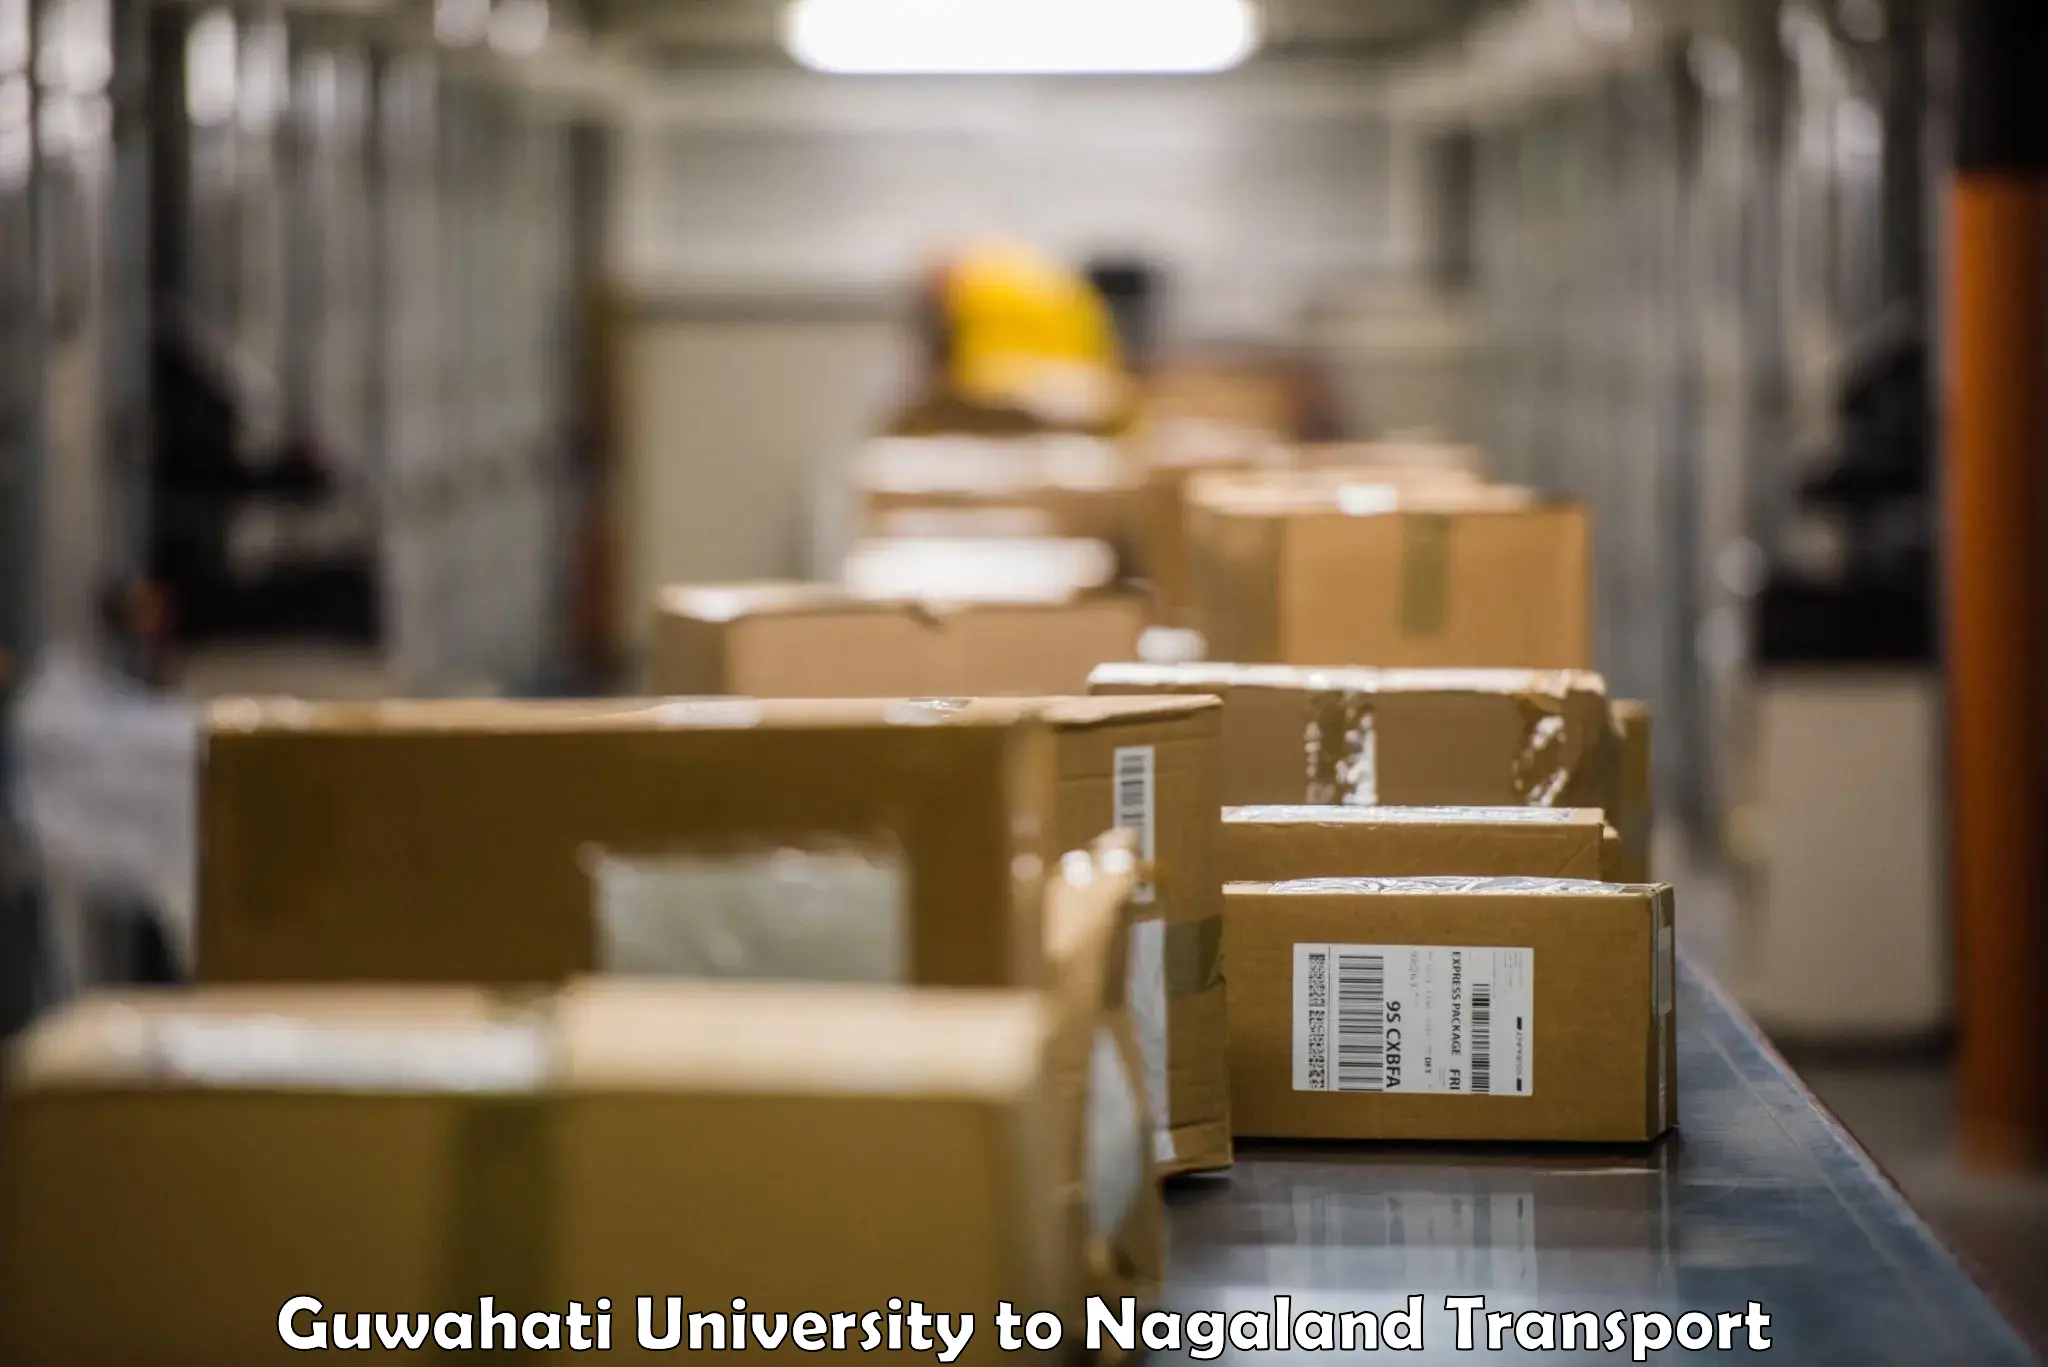 Daily parcel service transport Guwahati University to Dimapur